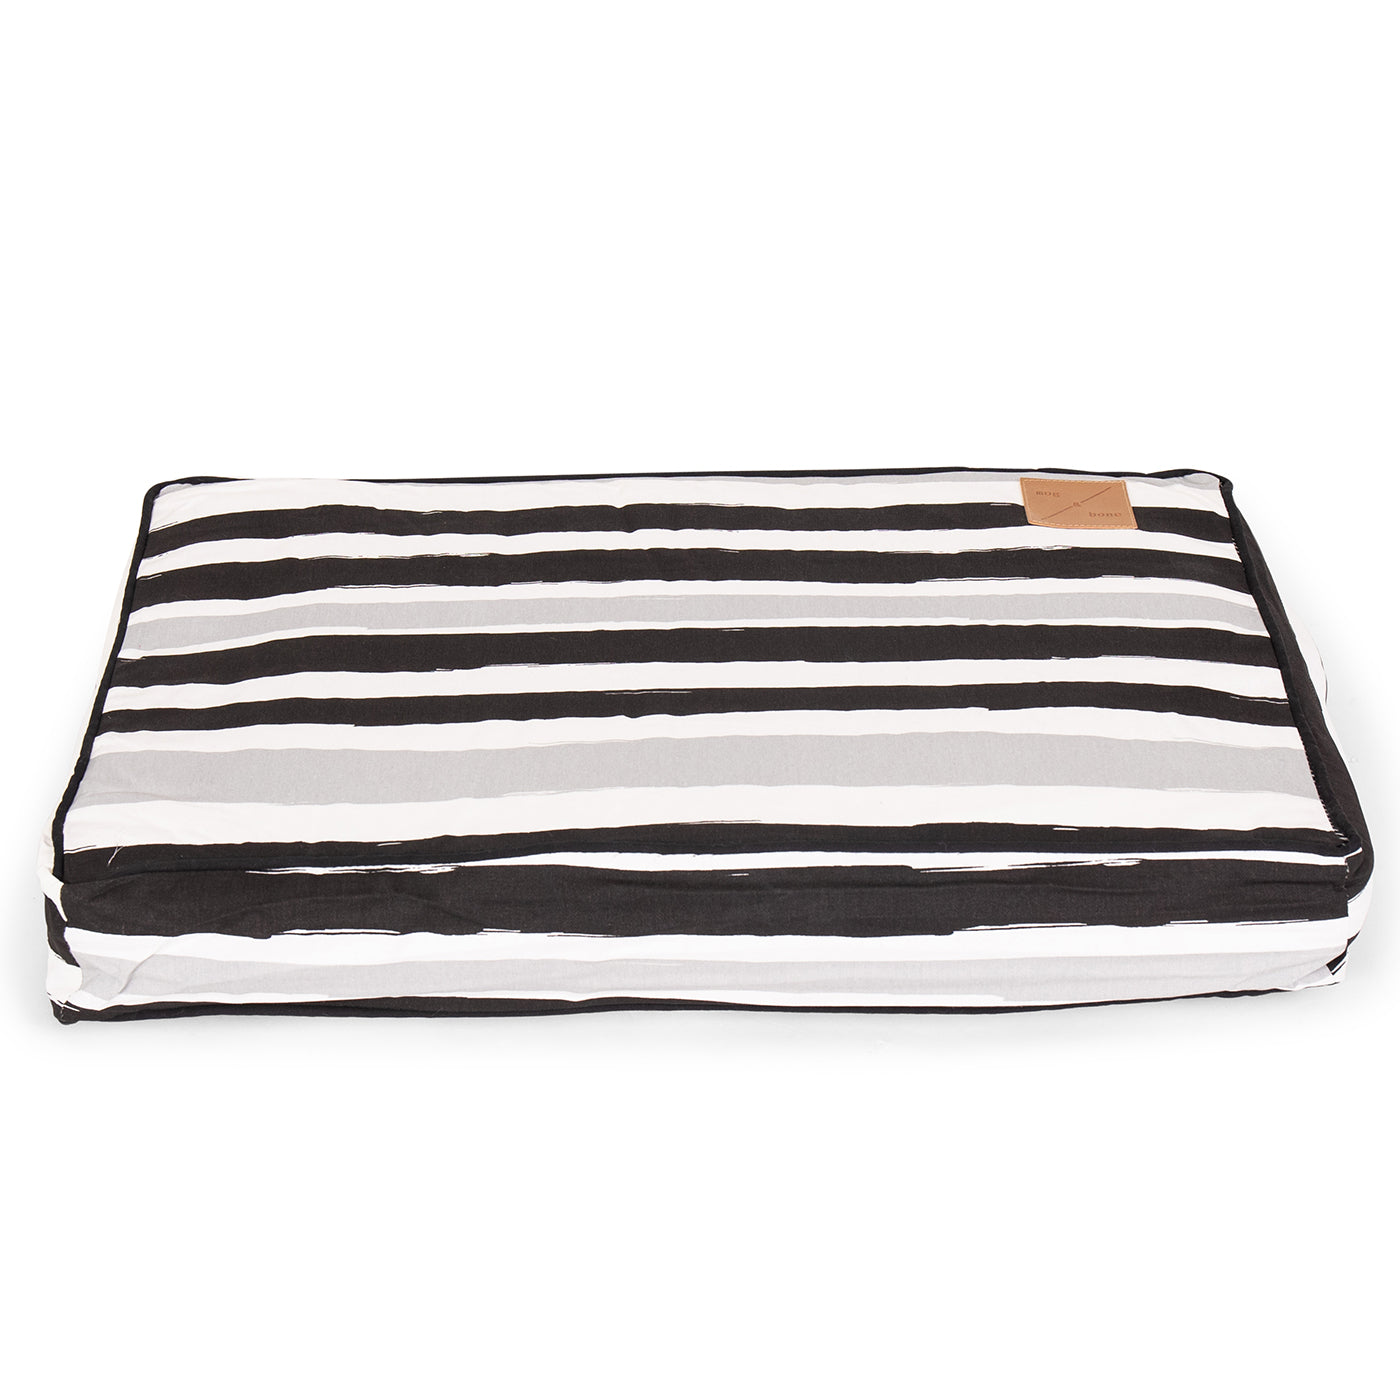 Mog and Bone Classic Cushion Dog Bed - Pebble Black Brush Stroke Print